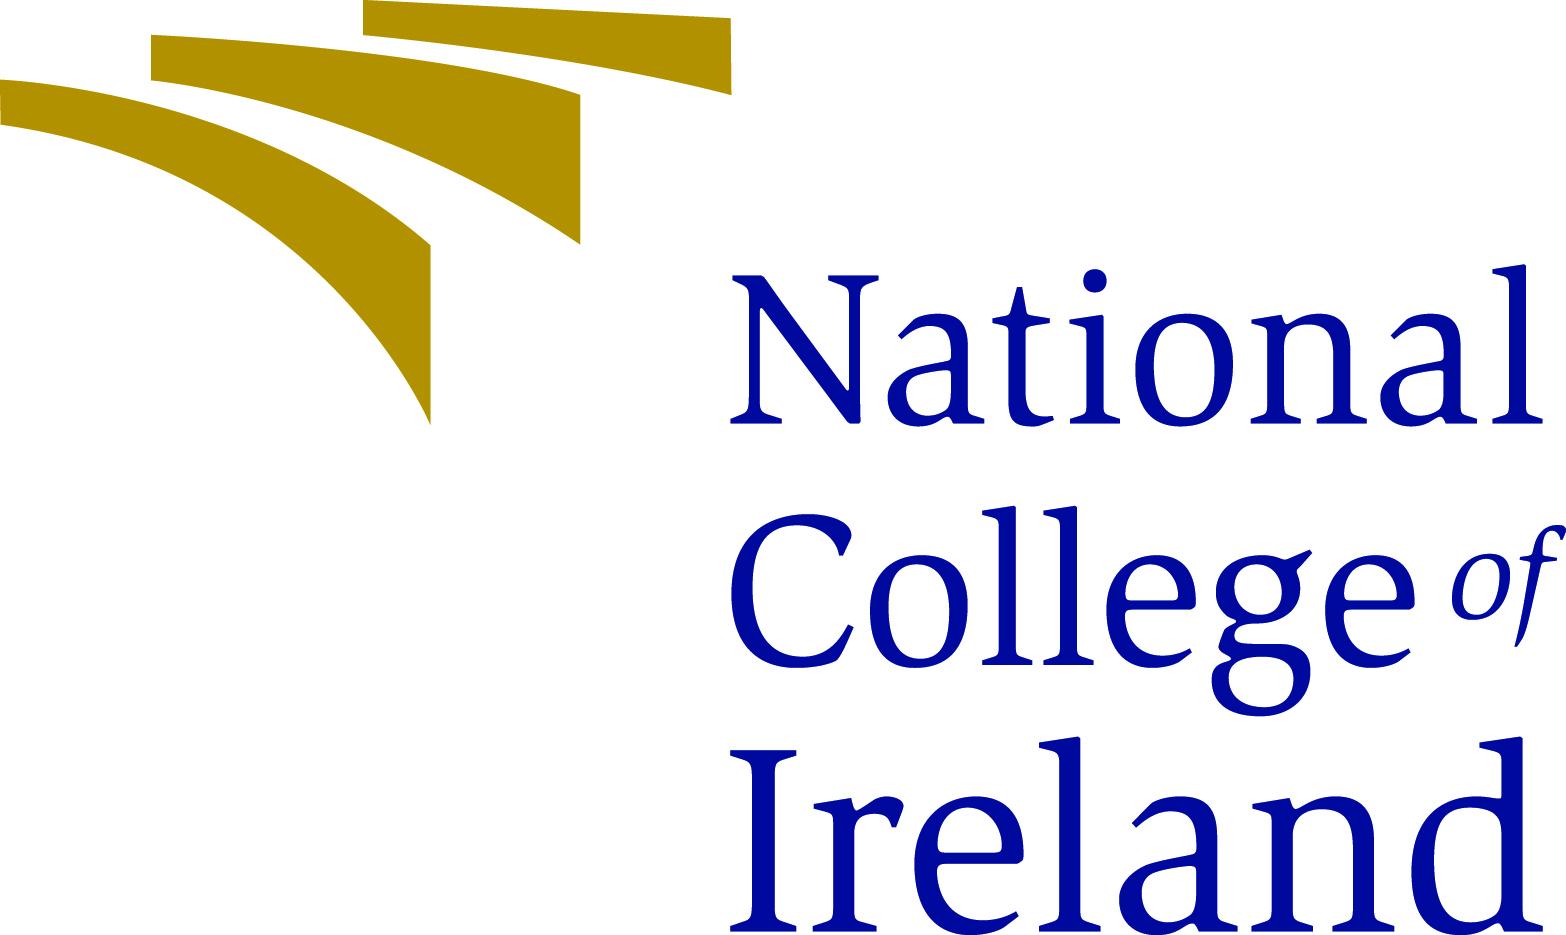 NCI_Logo